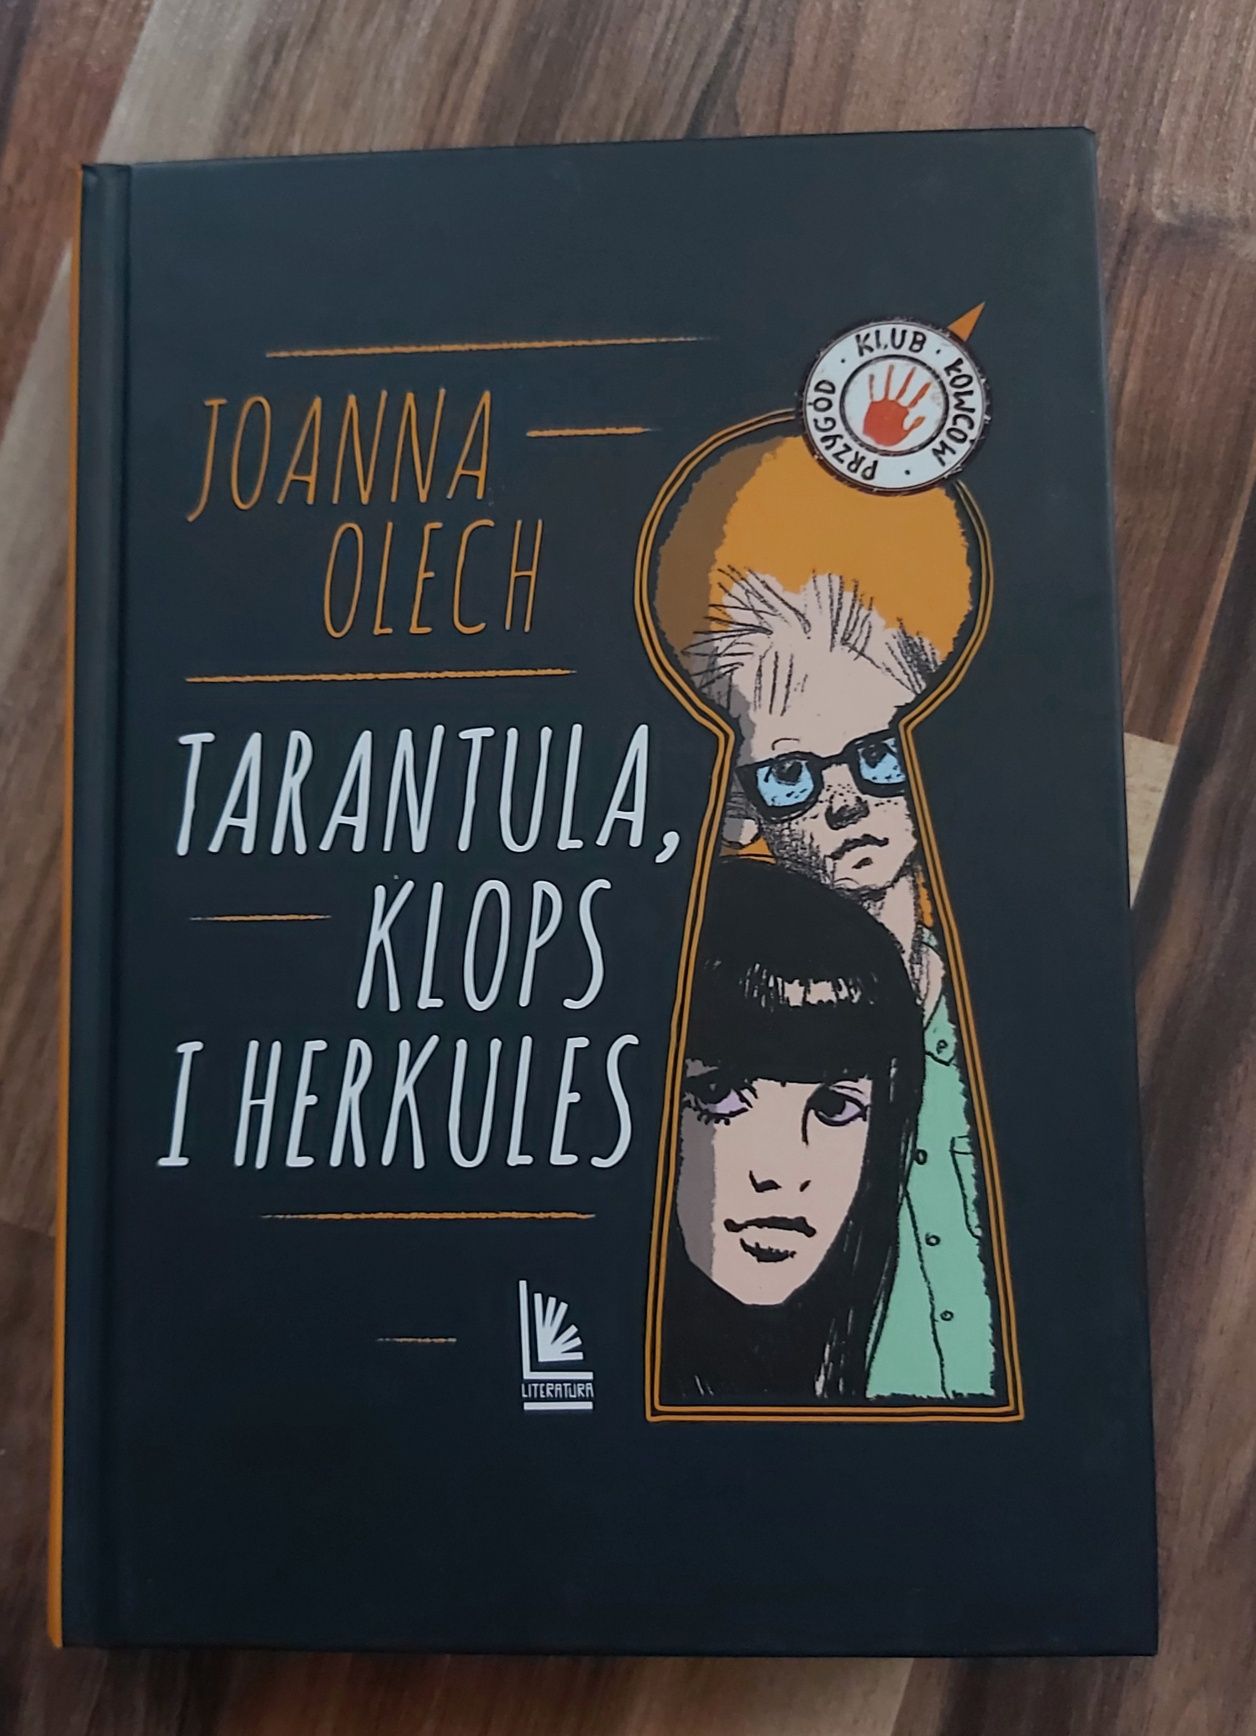 Joanna Olech - Tarantula, Klops i Herkules 

Joanna Olech